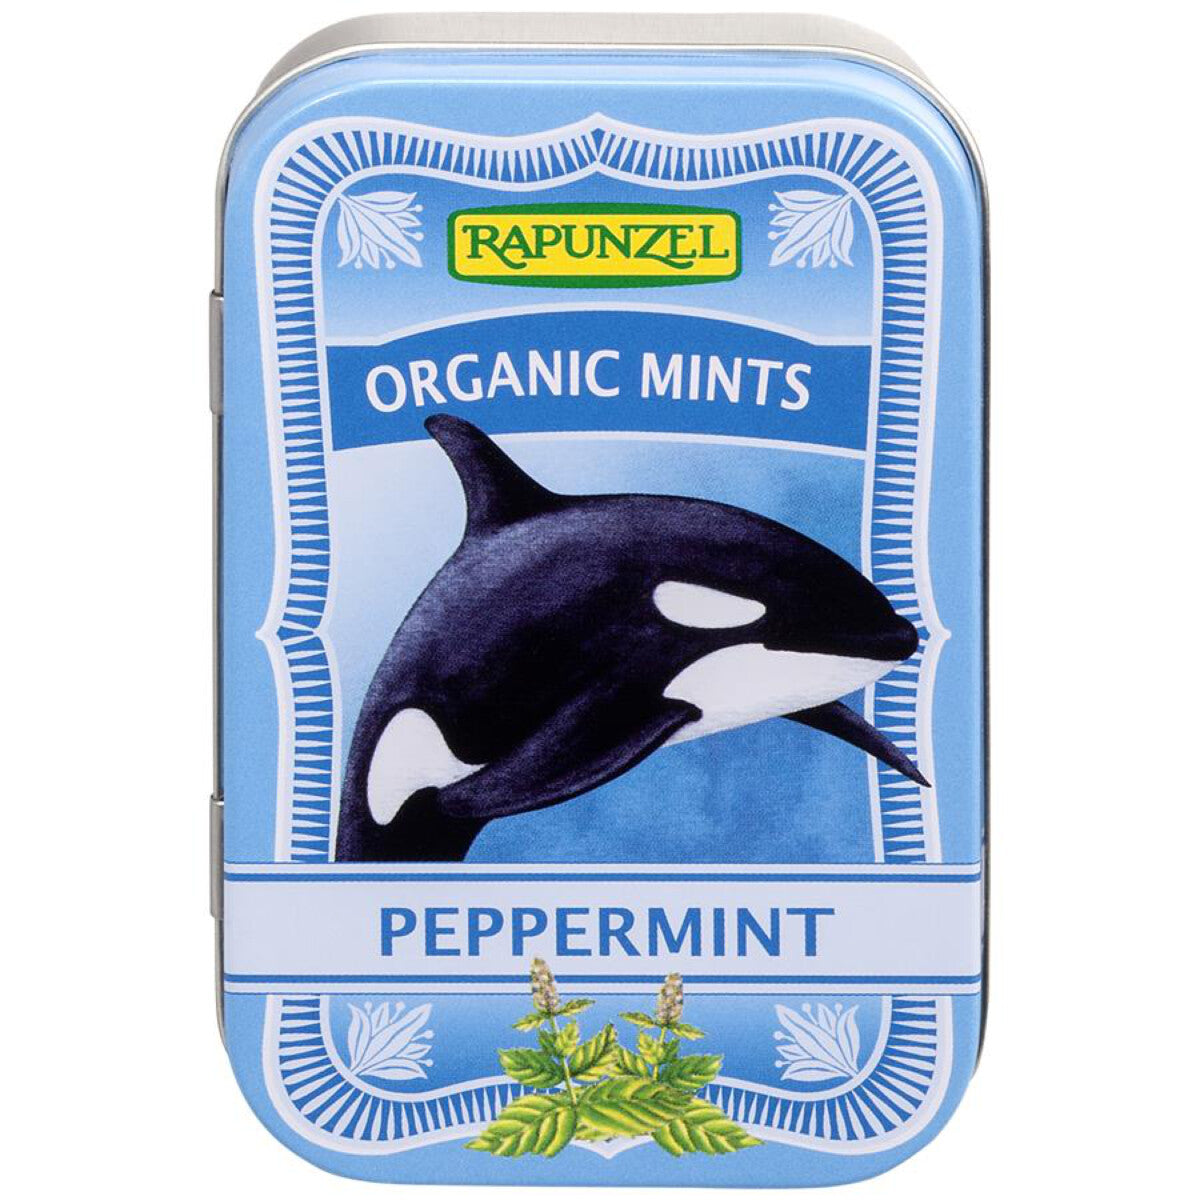 RAPUNZEL Organic Mints Peppermint - 50 g